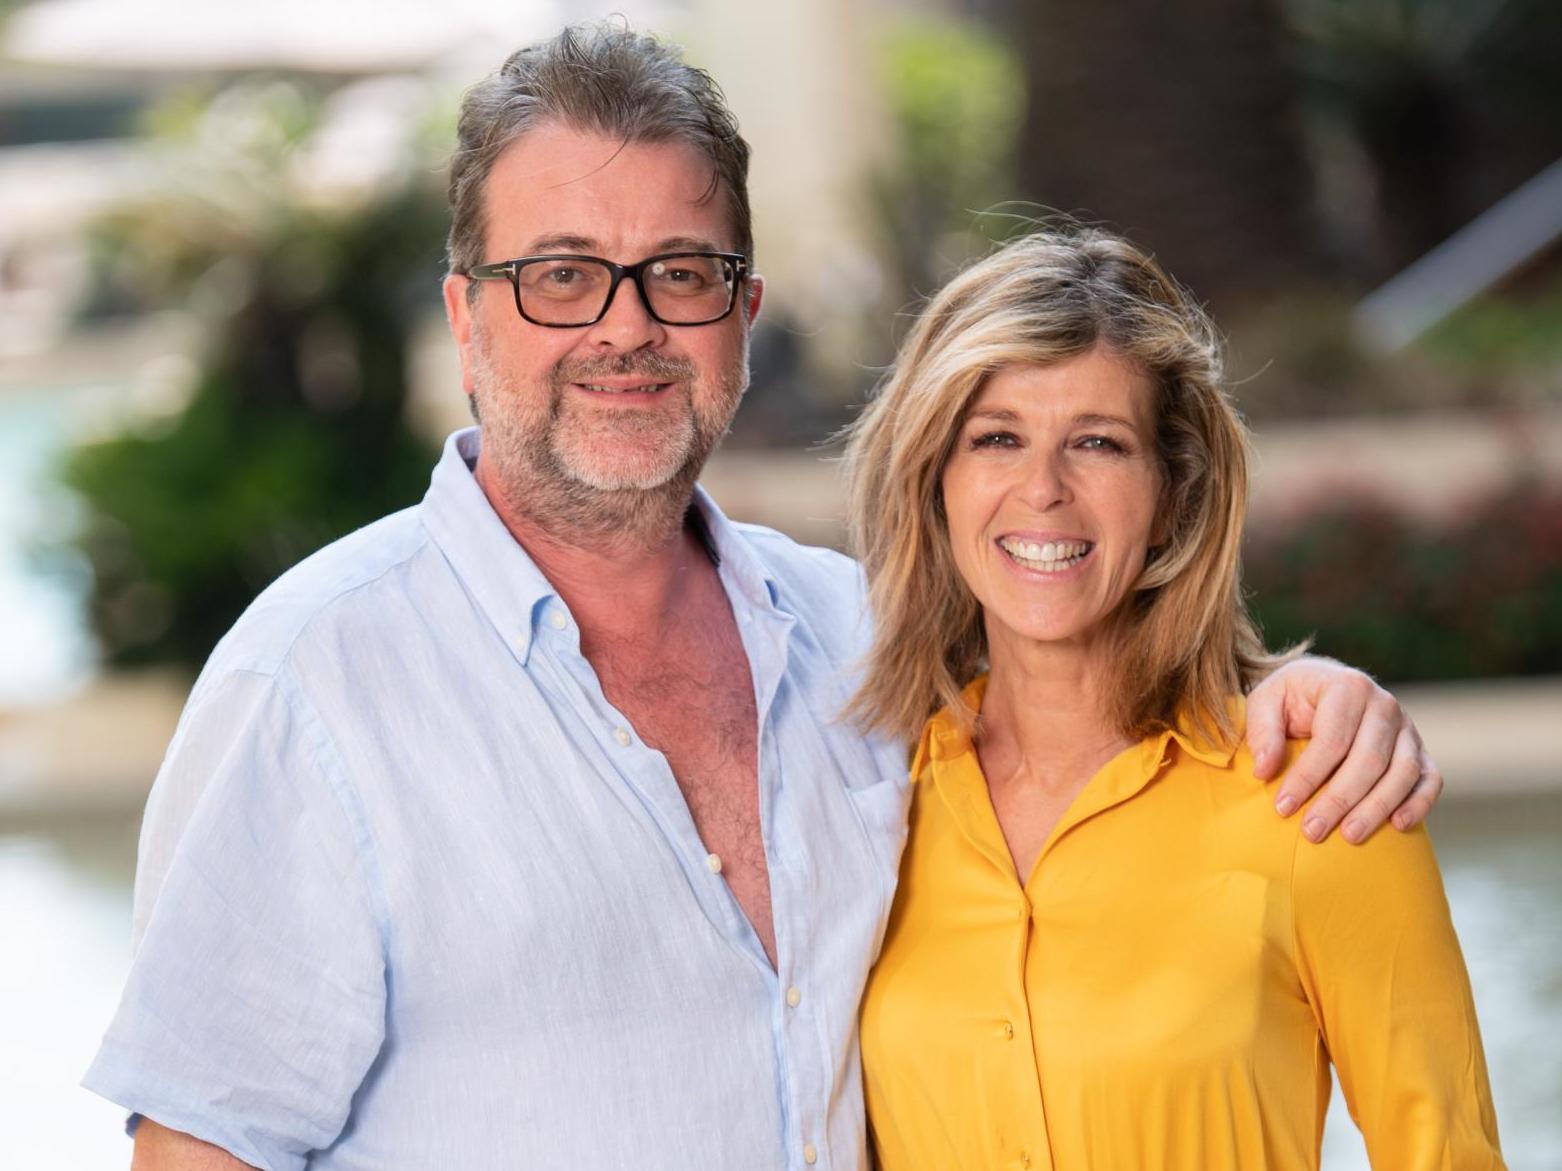 Kate Garraway's husband Derek Draper was hospitalised after contracting coronavirus in March